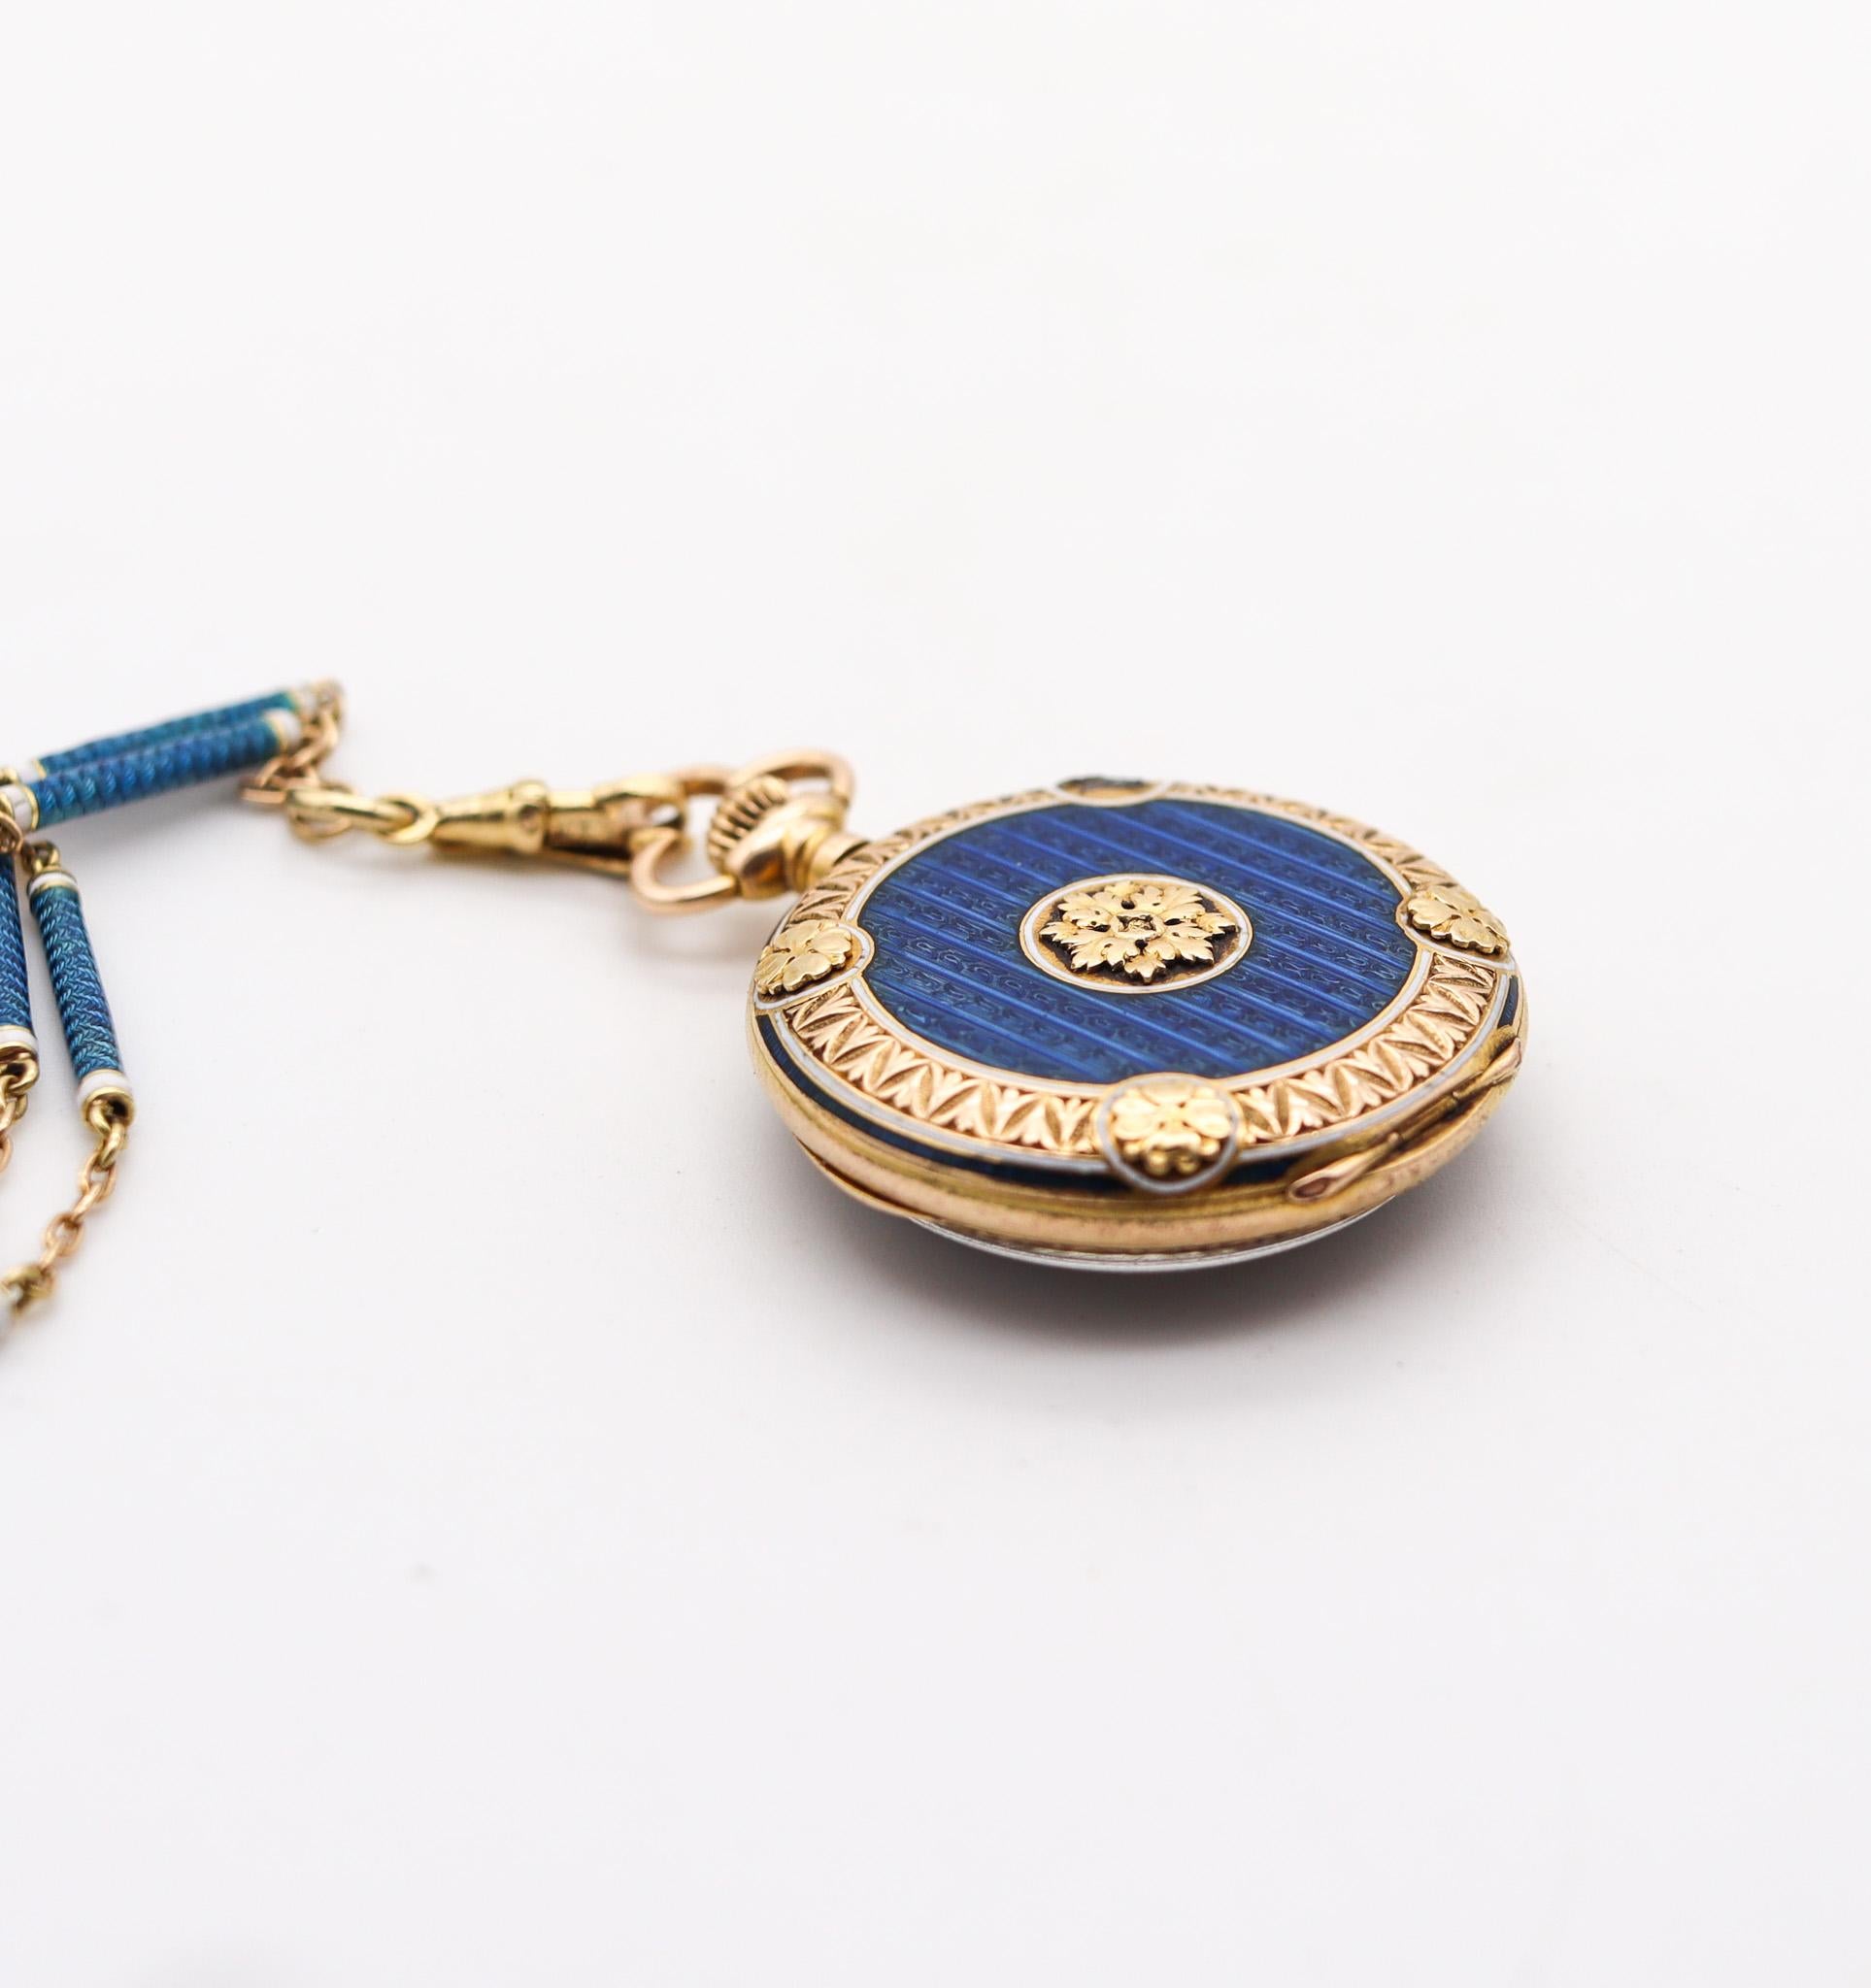 Edwardian 1903 Swiss Necklace Watch In 14Kt Gold With Guilloché Blue Enamel For Sale 3